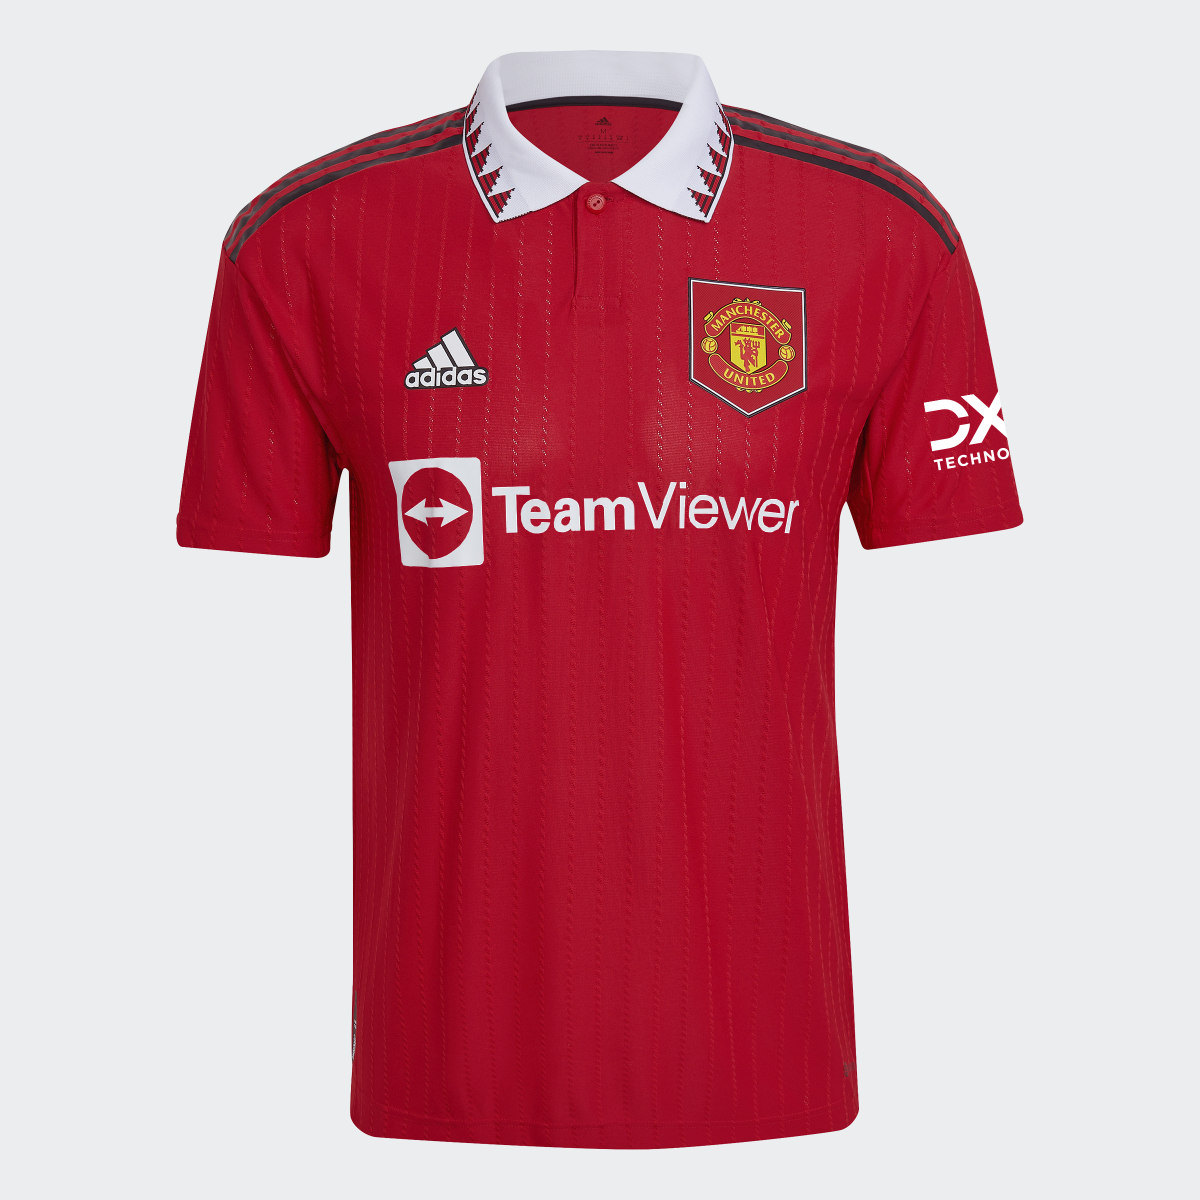 Adidas Jersey Uniforme de Local Manchester United 22/23. 5